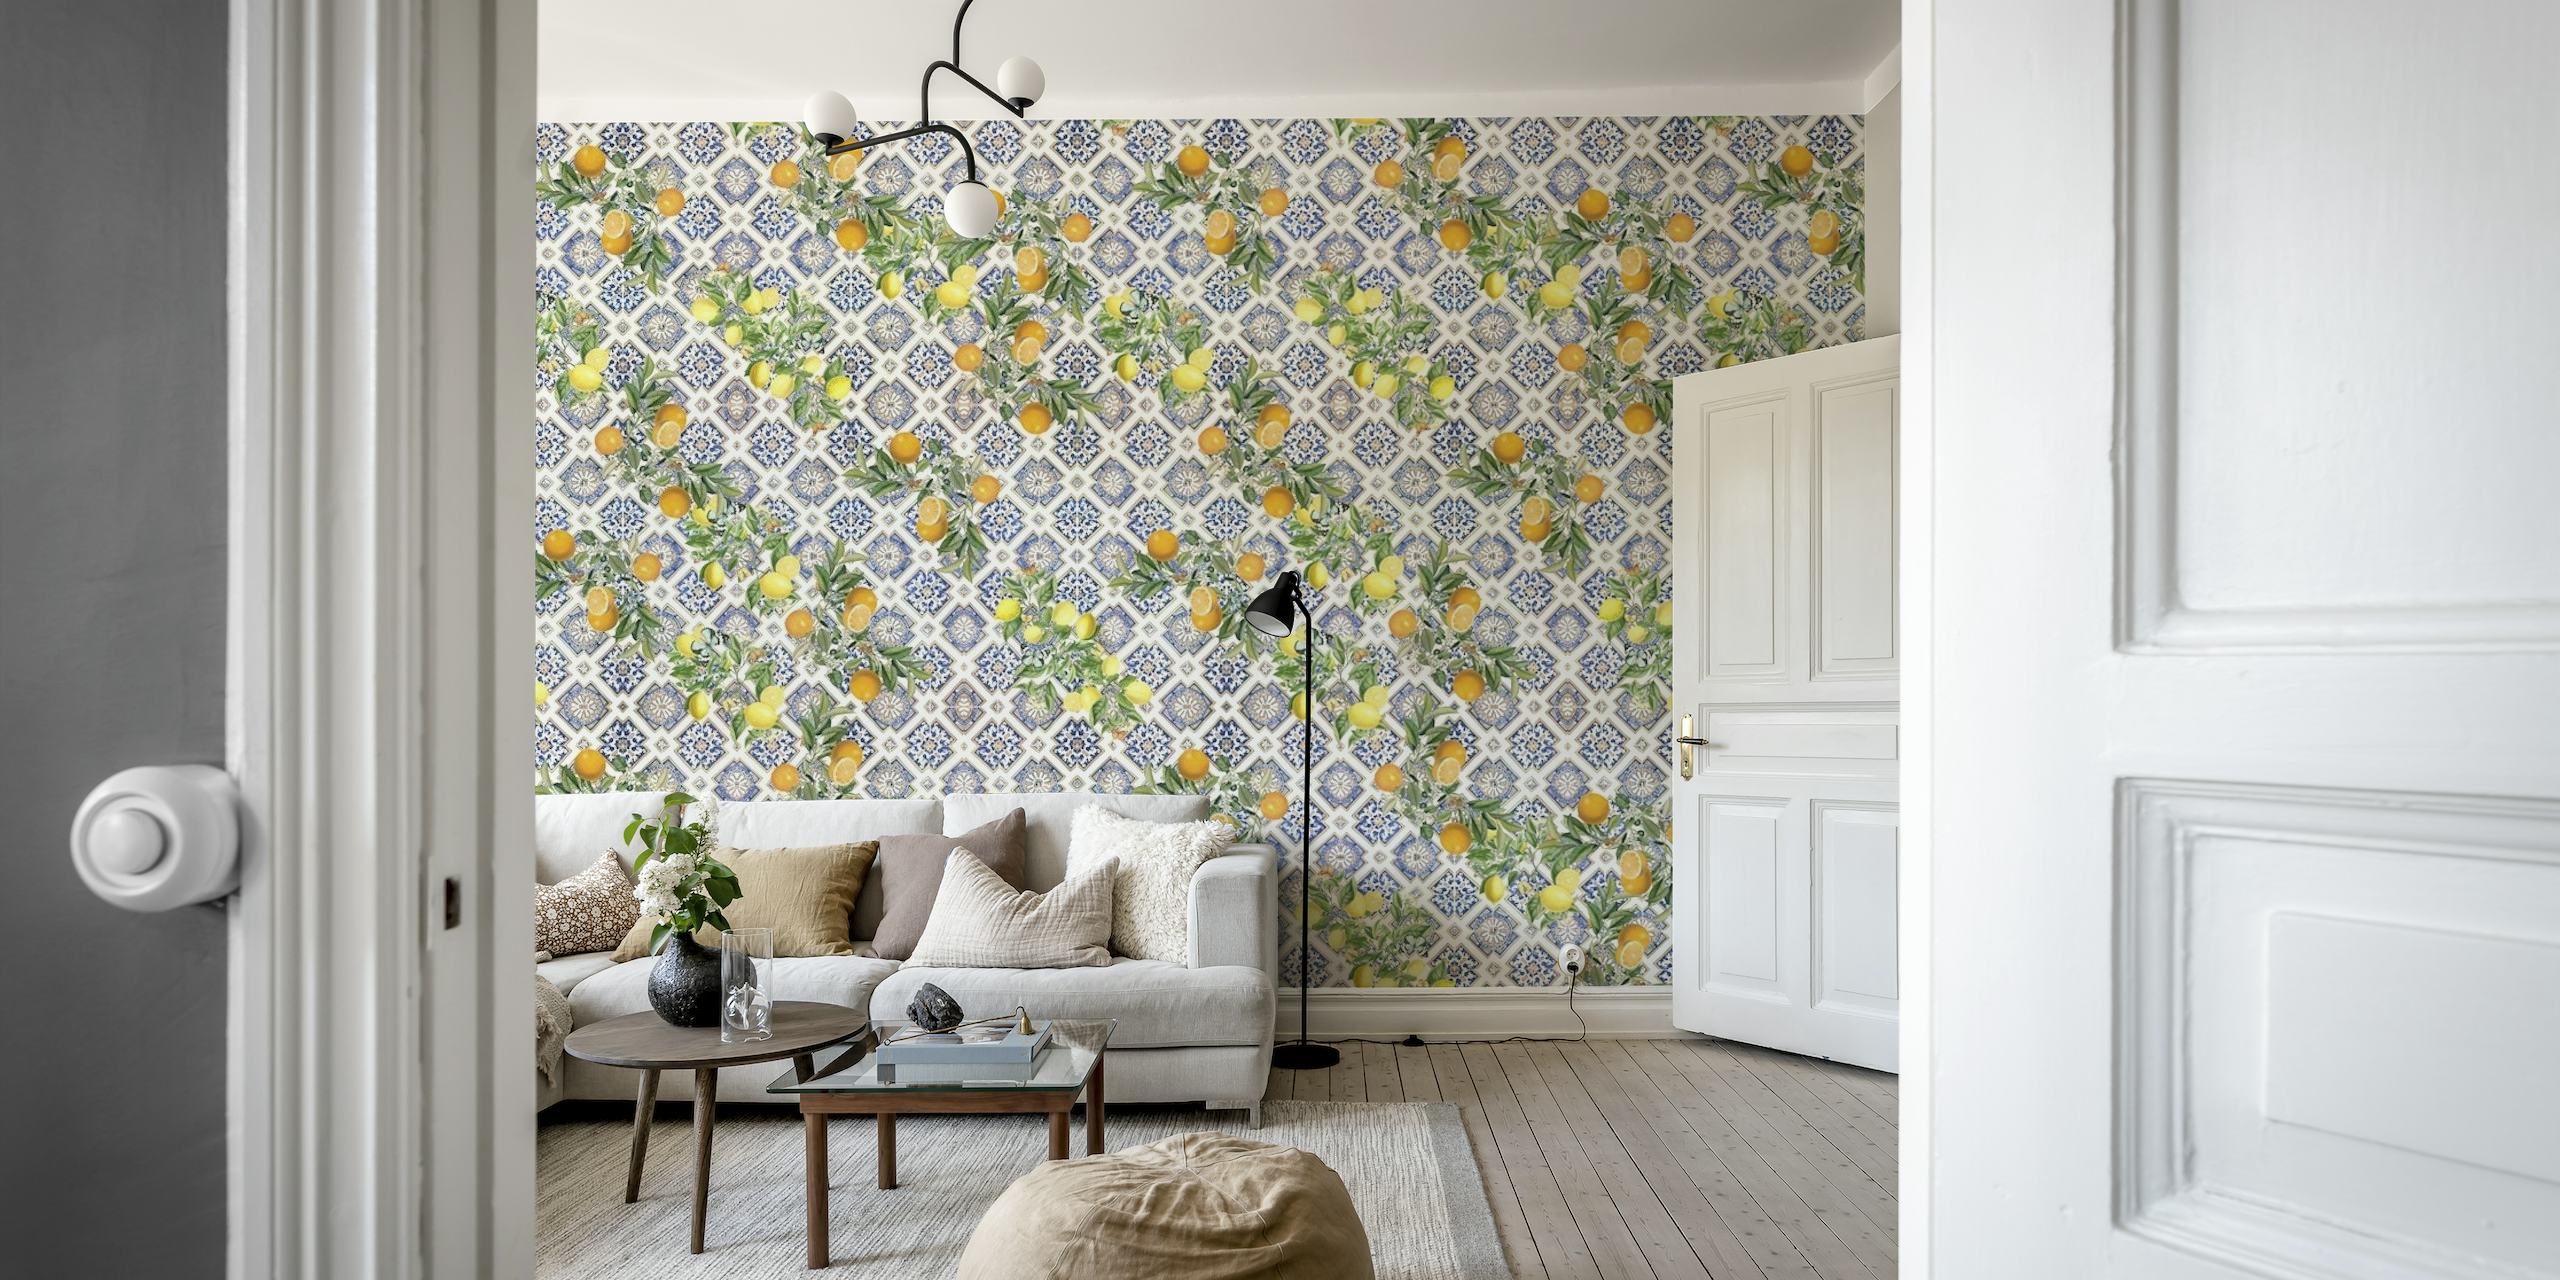 Mediterranean Blue tiles and citrus fruit pattern wallpaper